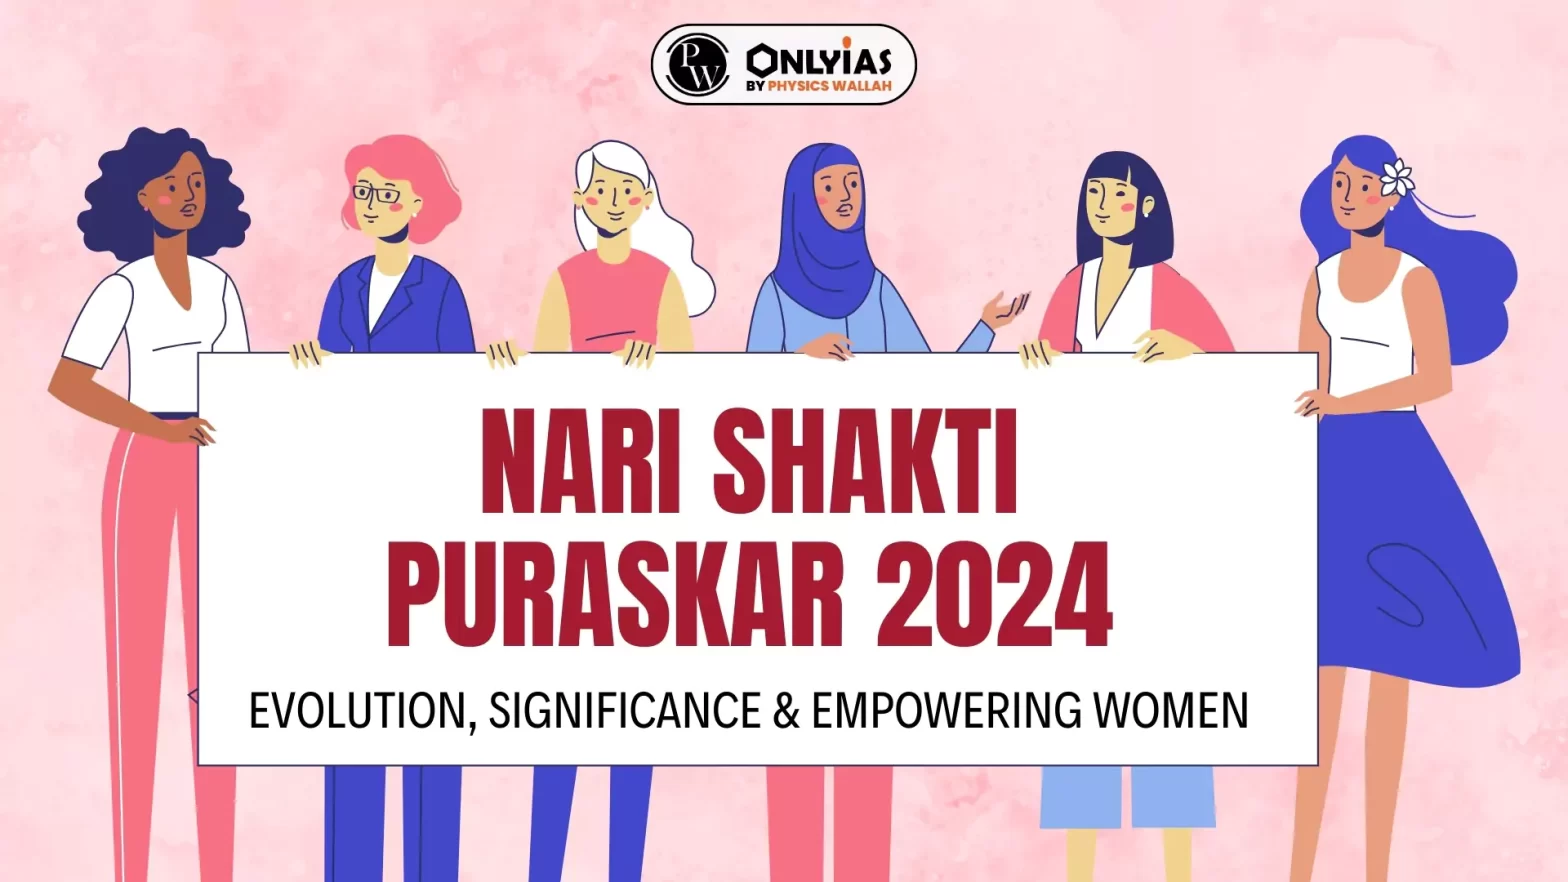 Nari Shakti Puraskar 2024: Evolution, Significance & Empowering Women